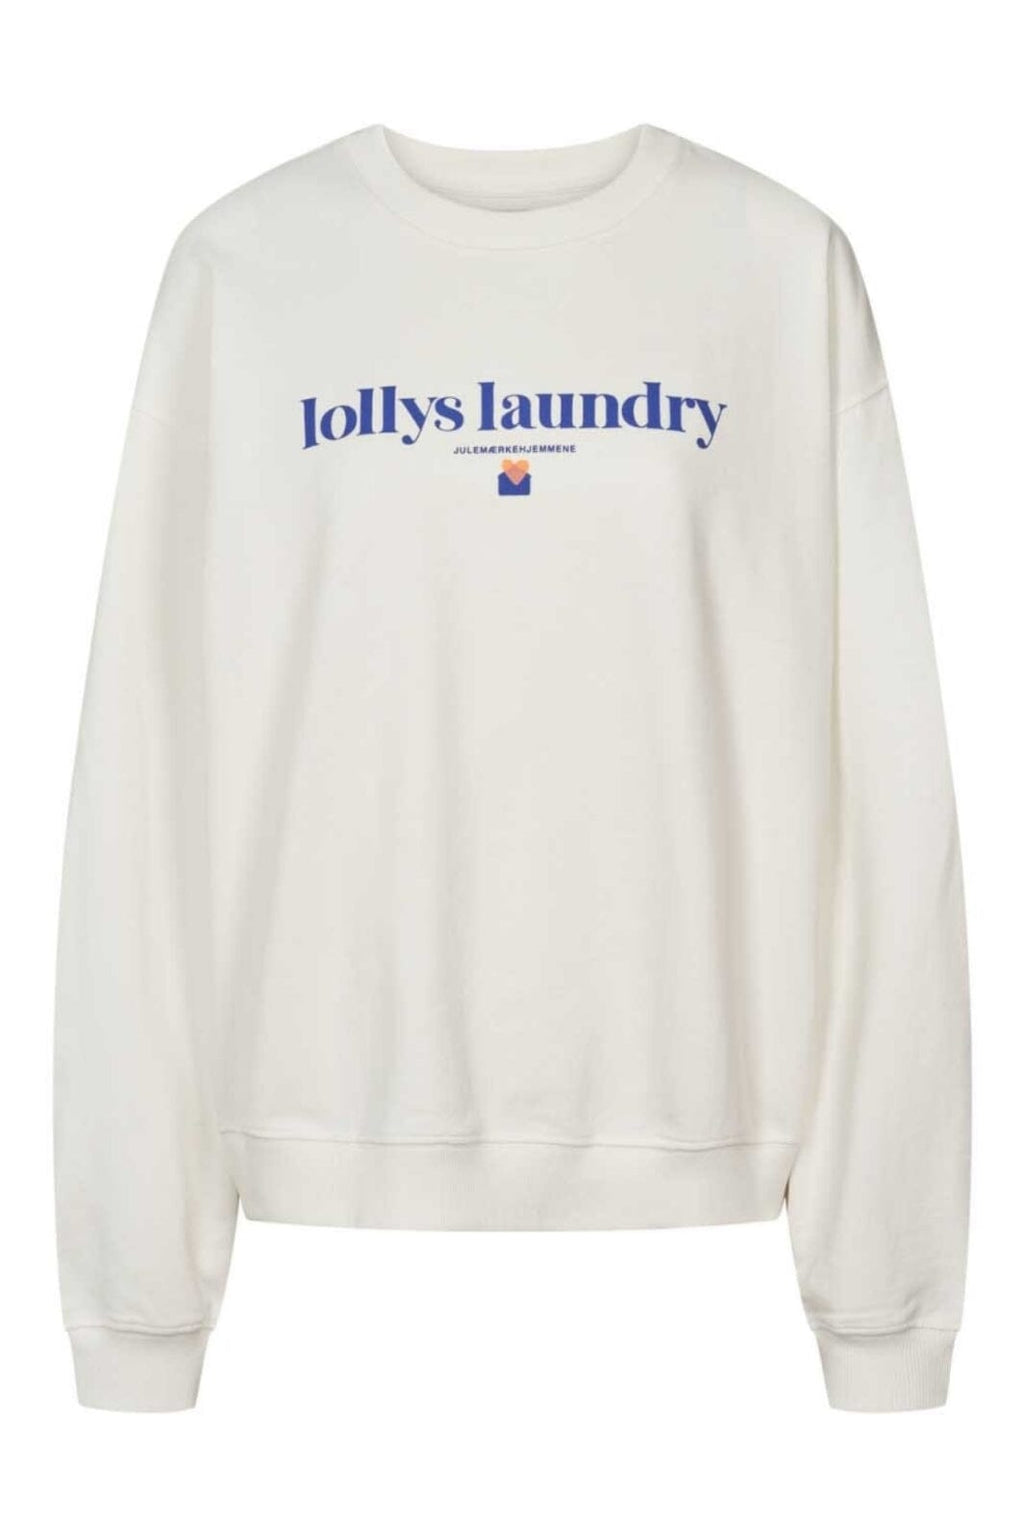 klud alarm grænse Lollys Laundry | 90024-2005 - Creme » Shop hos Molly&My